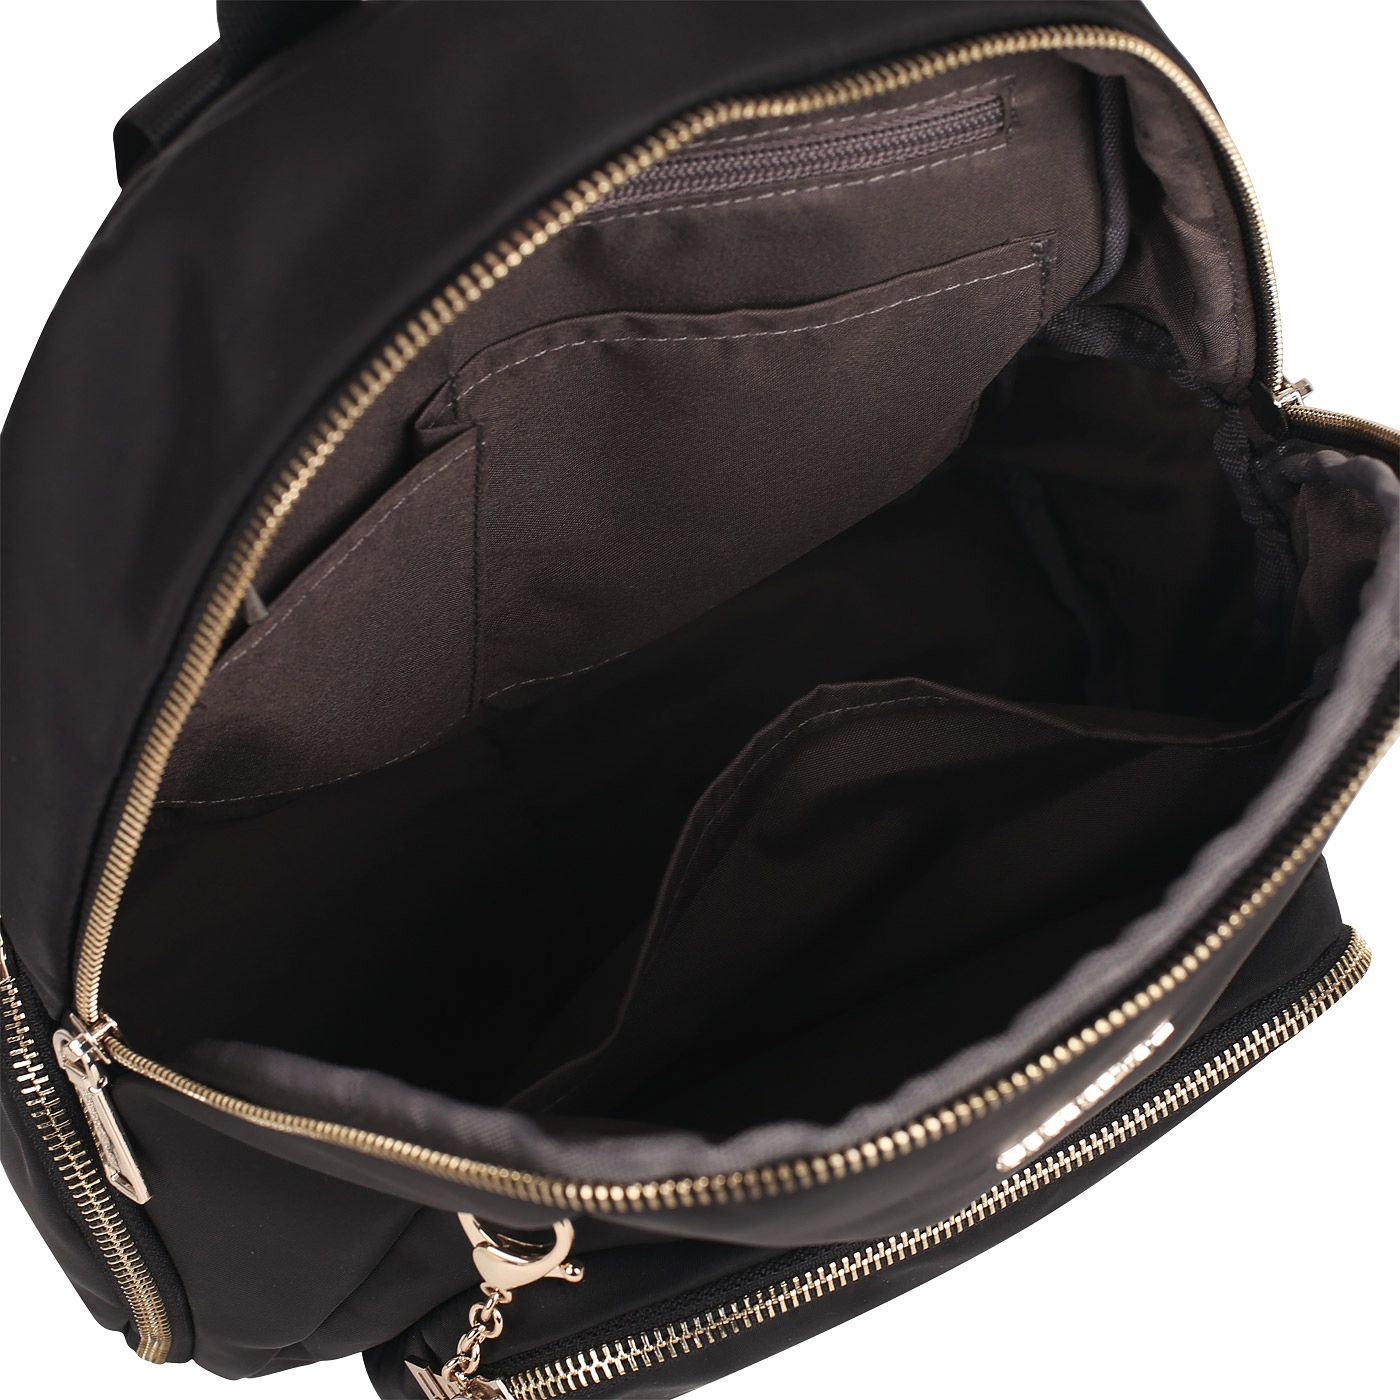 Рюкзак Eberhart Backpack черный EBH21932-B купить цена 9800.00 ₽